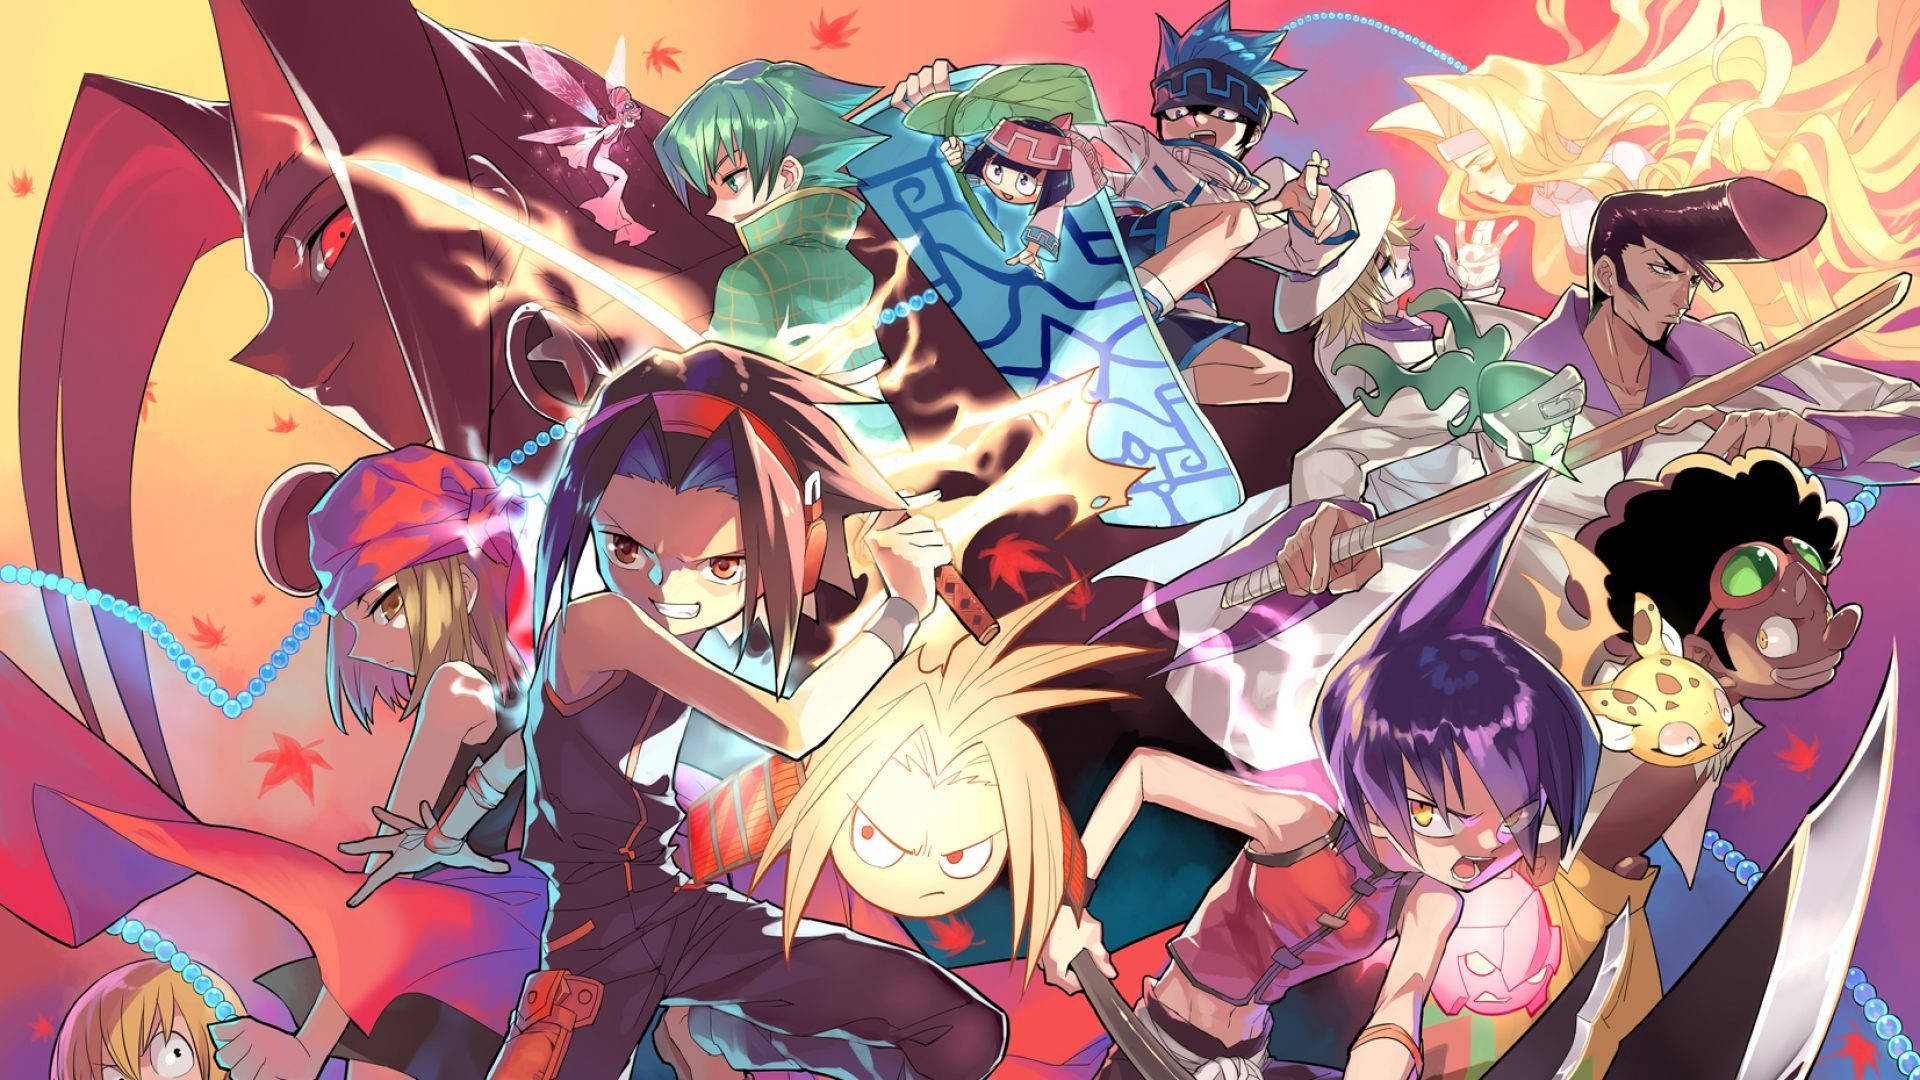 Shaman King Shōnen Anime Cover Background